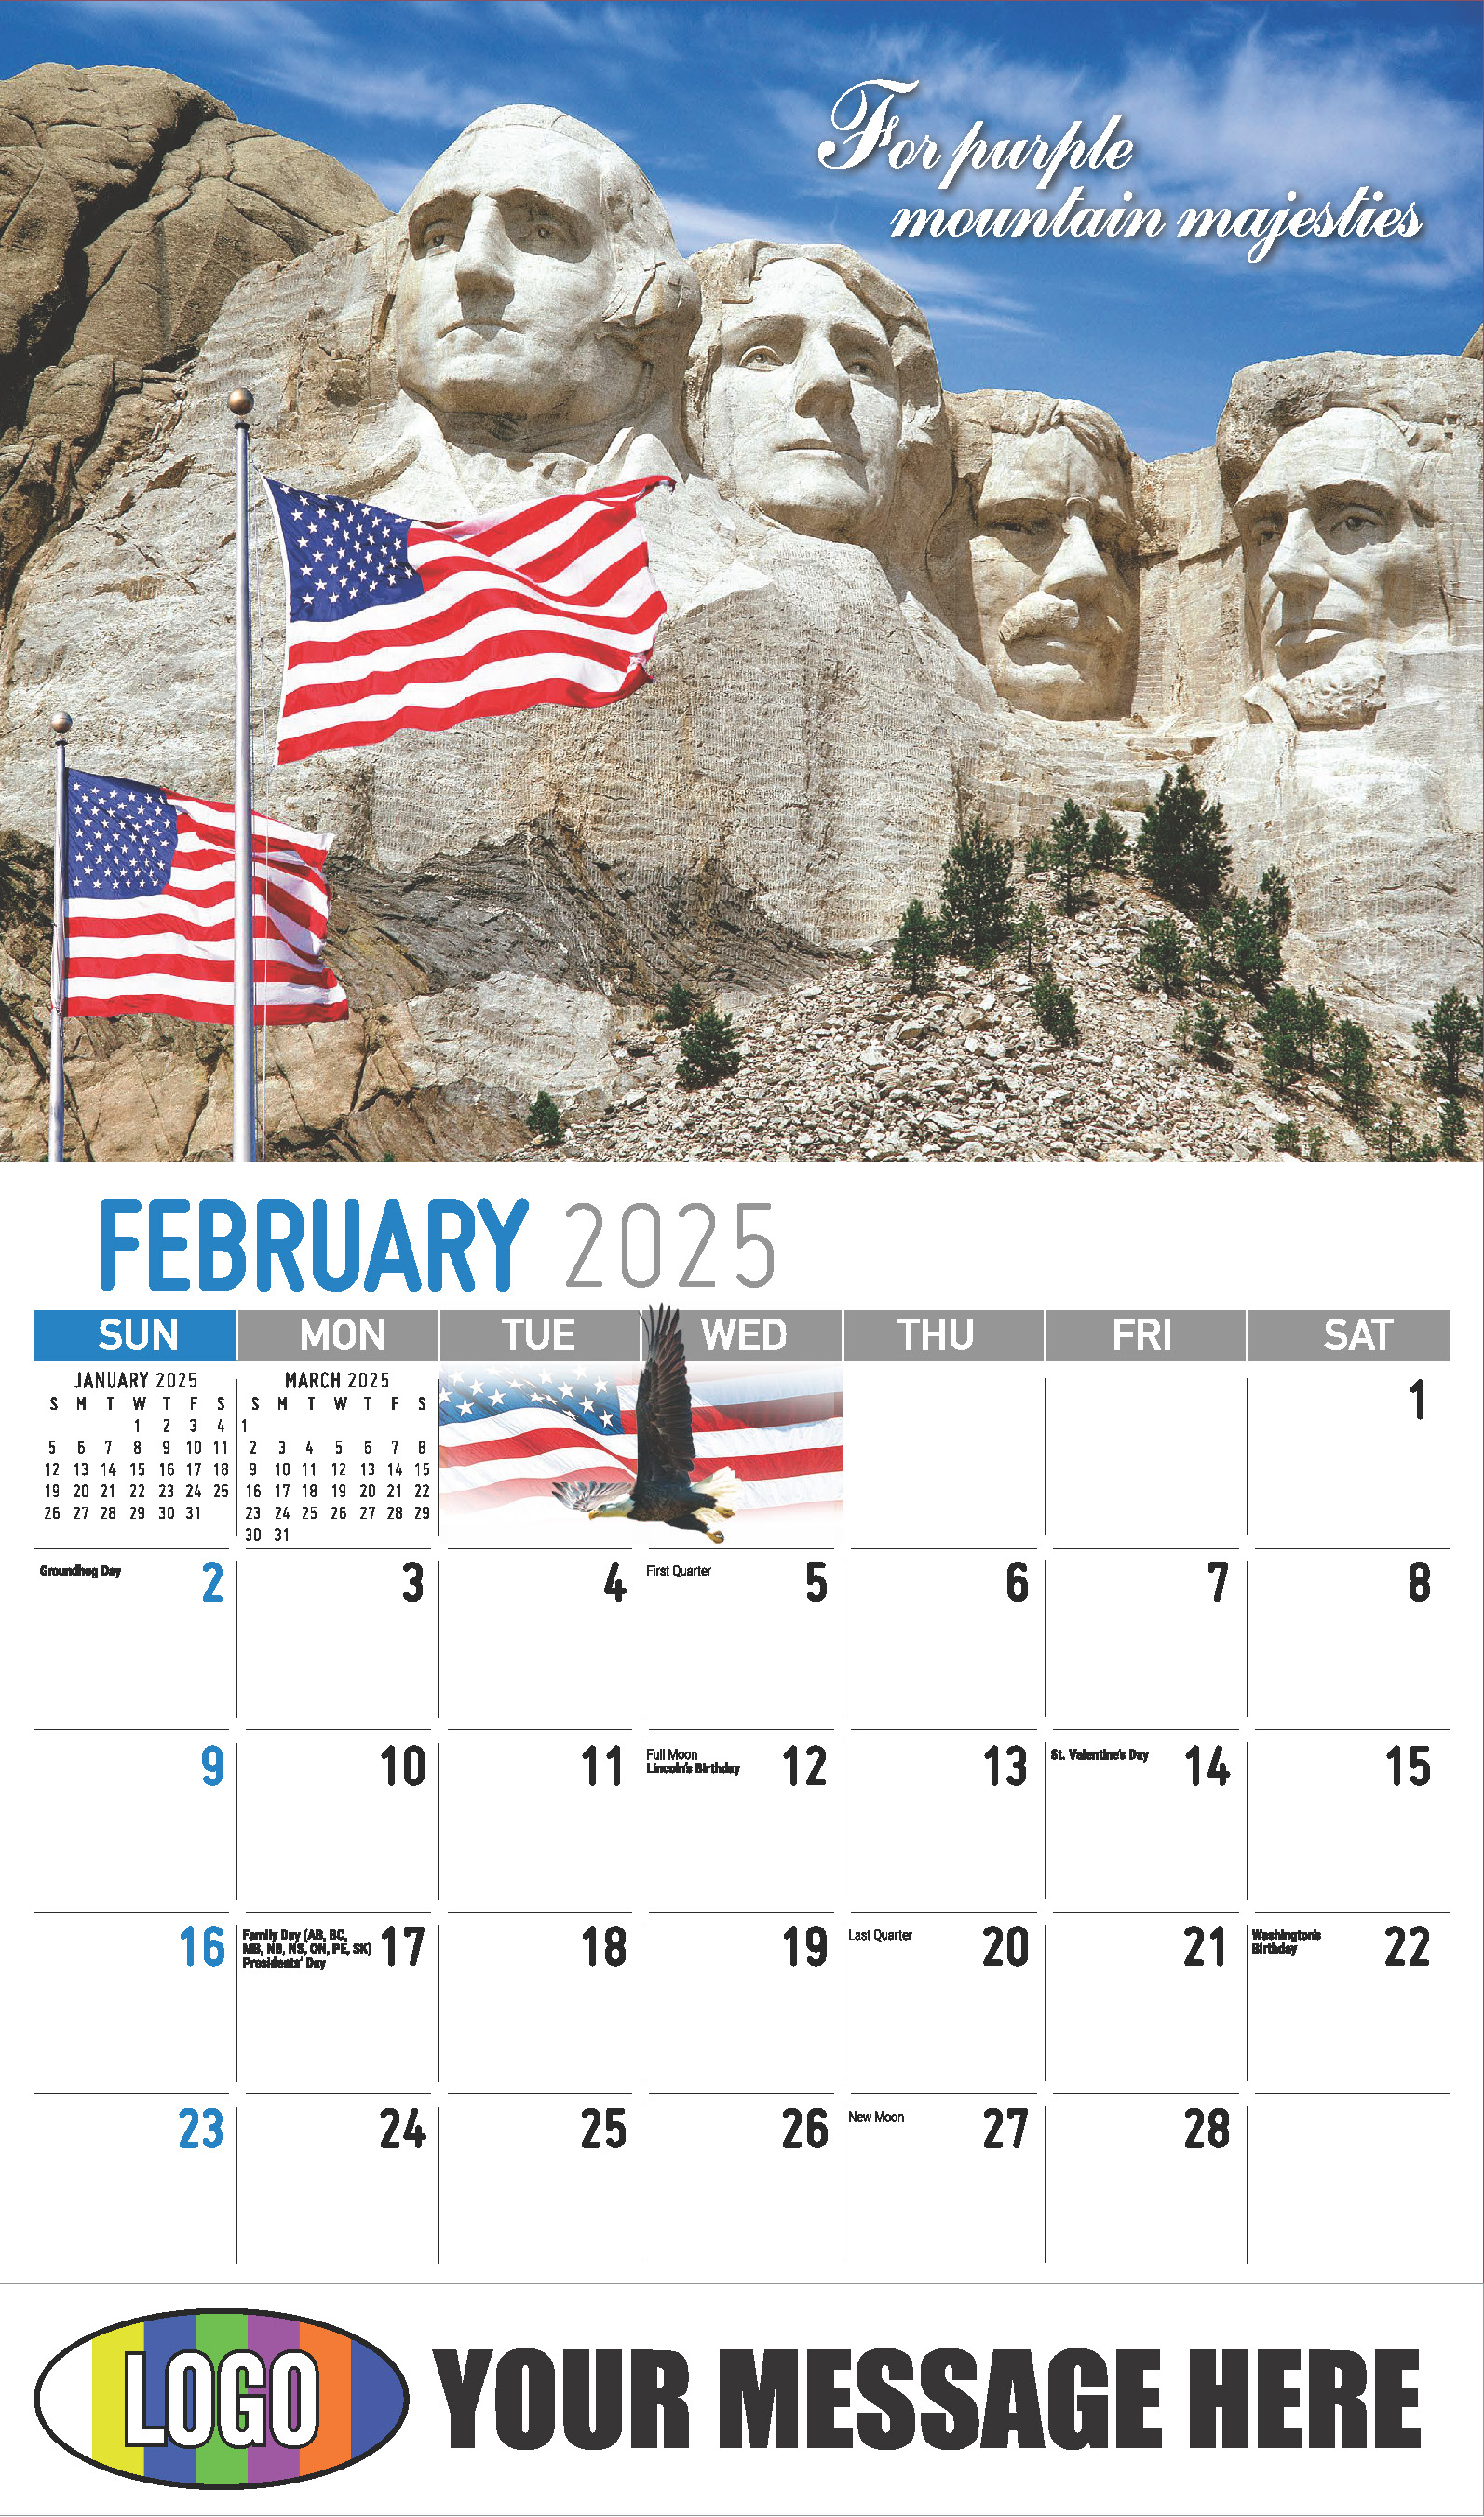 America the Beautiful  2025 Business Advertising Wall Calendar - February